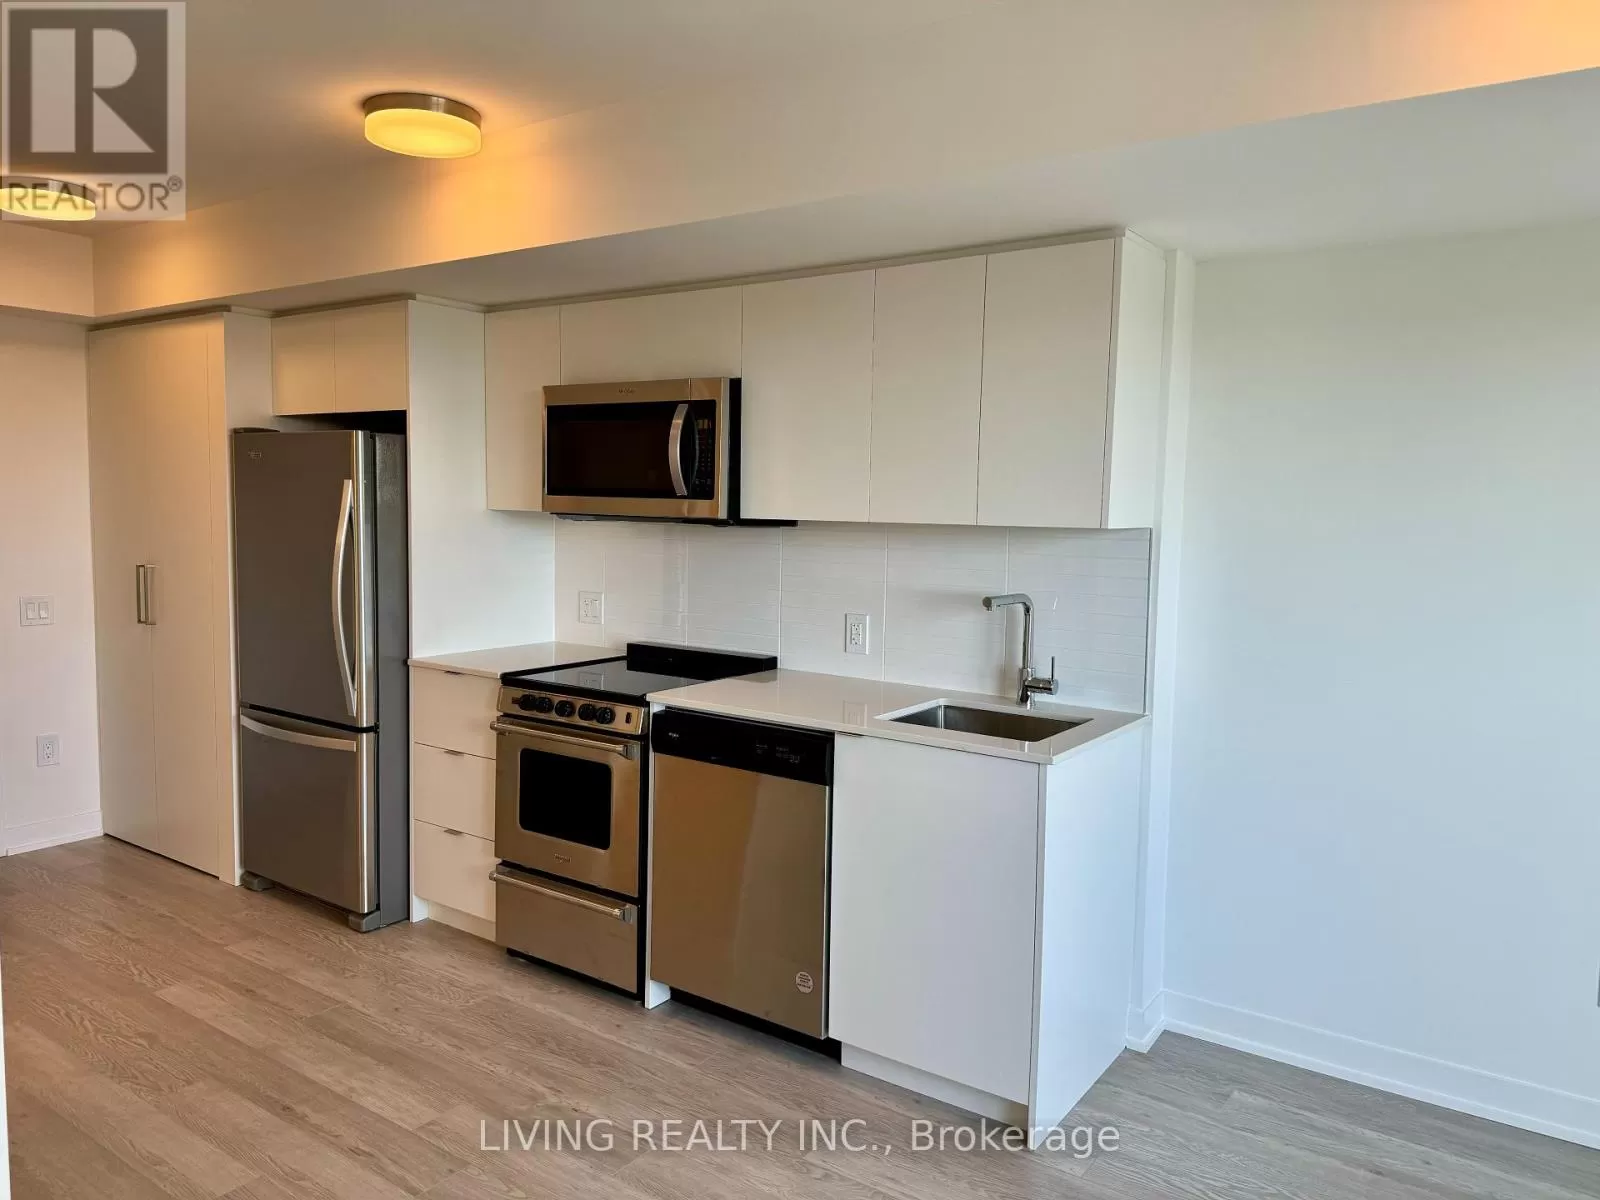 Apartment for rent: 805 - 480 Wilson Avenue, Toronto, Ontario M3H 0G1